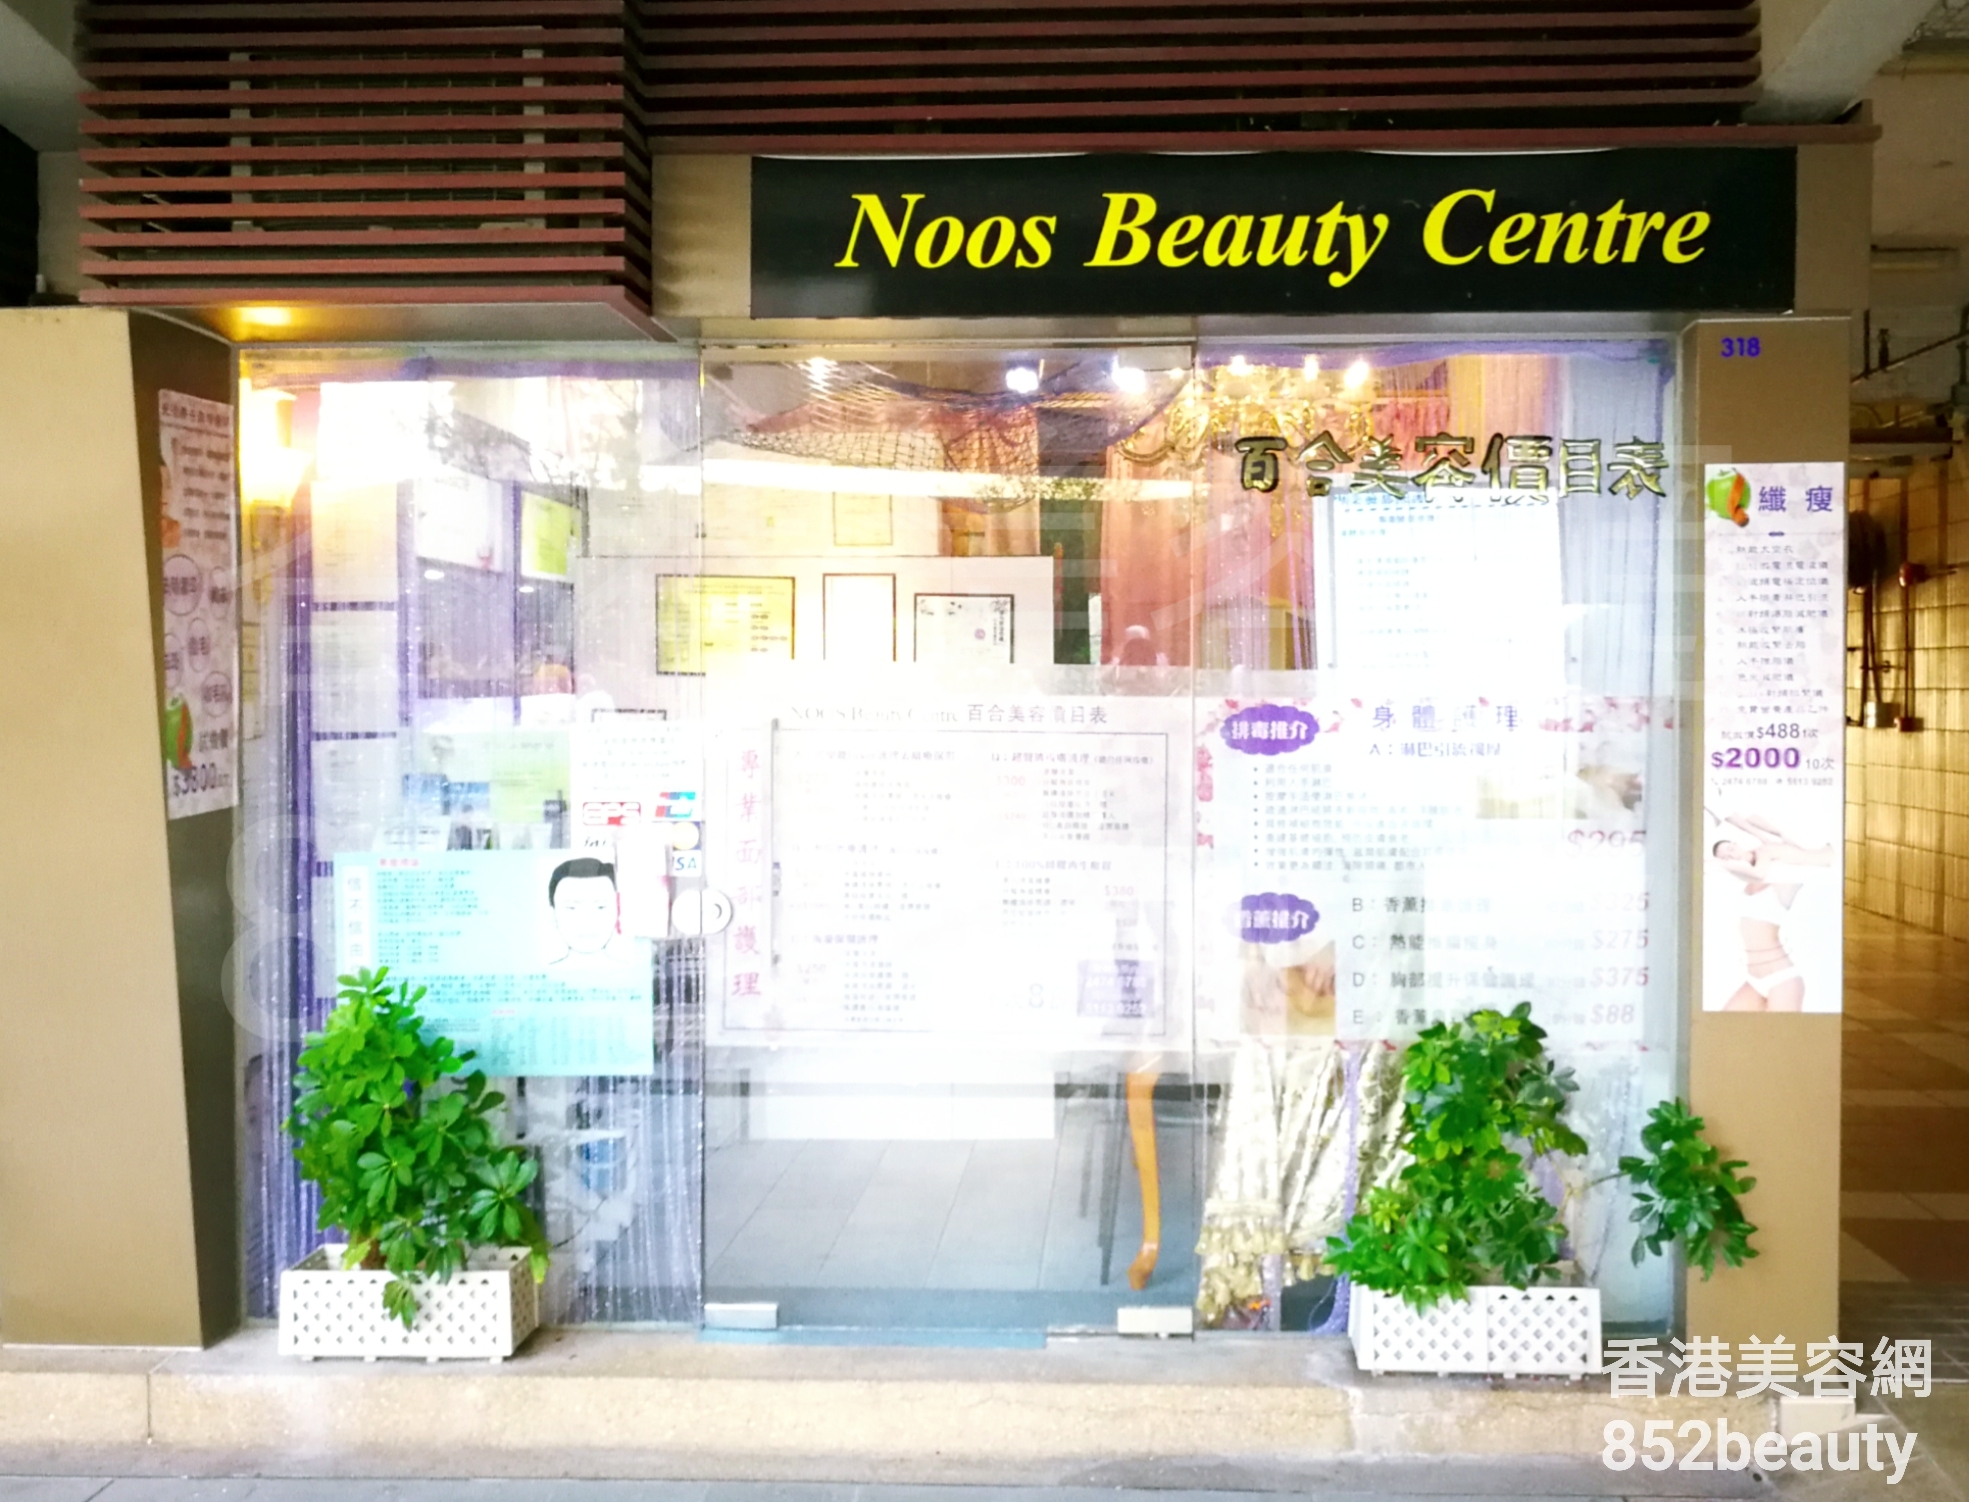 修眉/眼睫毛: Noos Beauty Centre